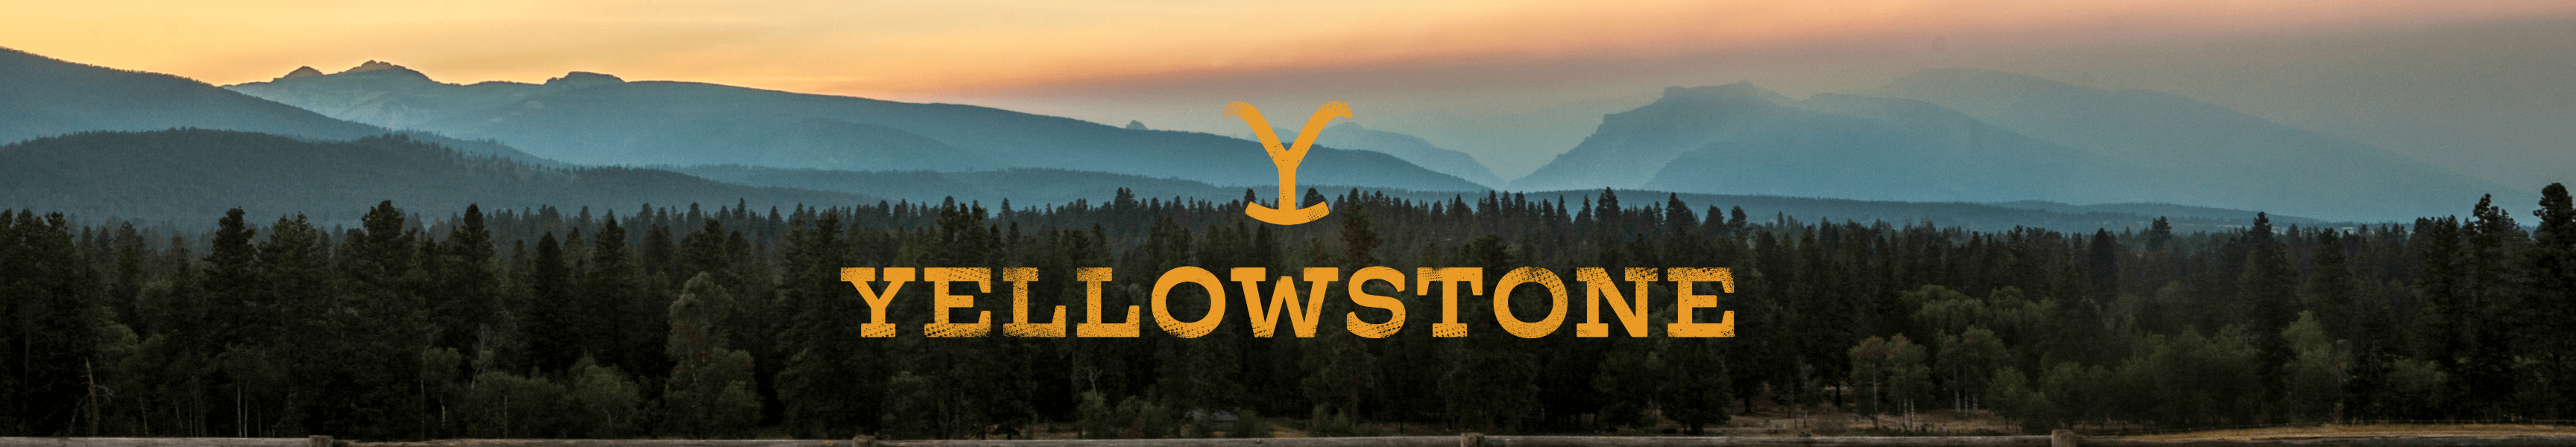 Yellowstone Dekorationen